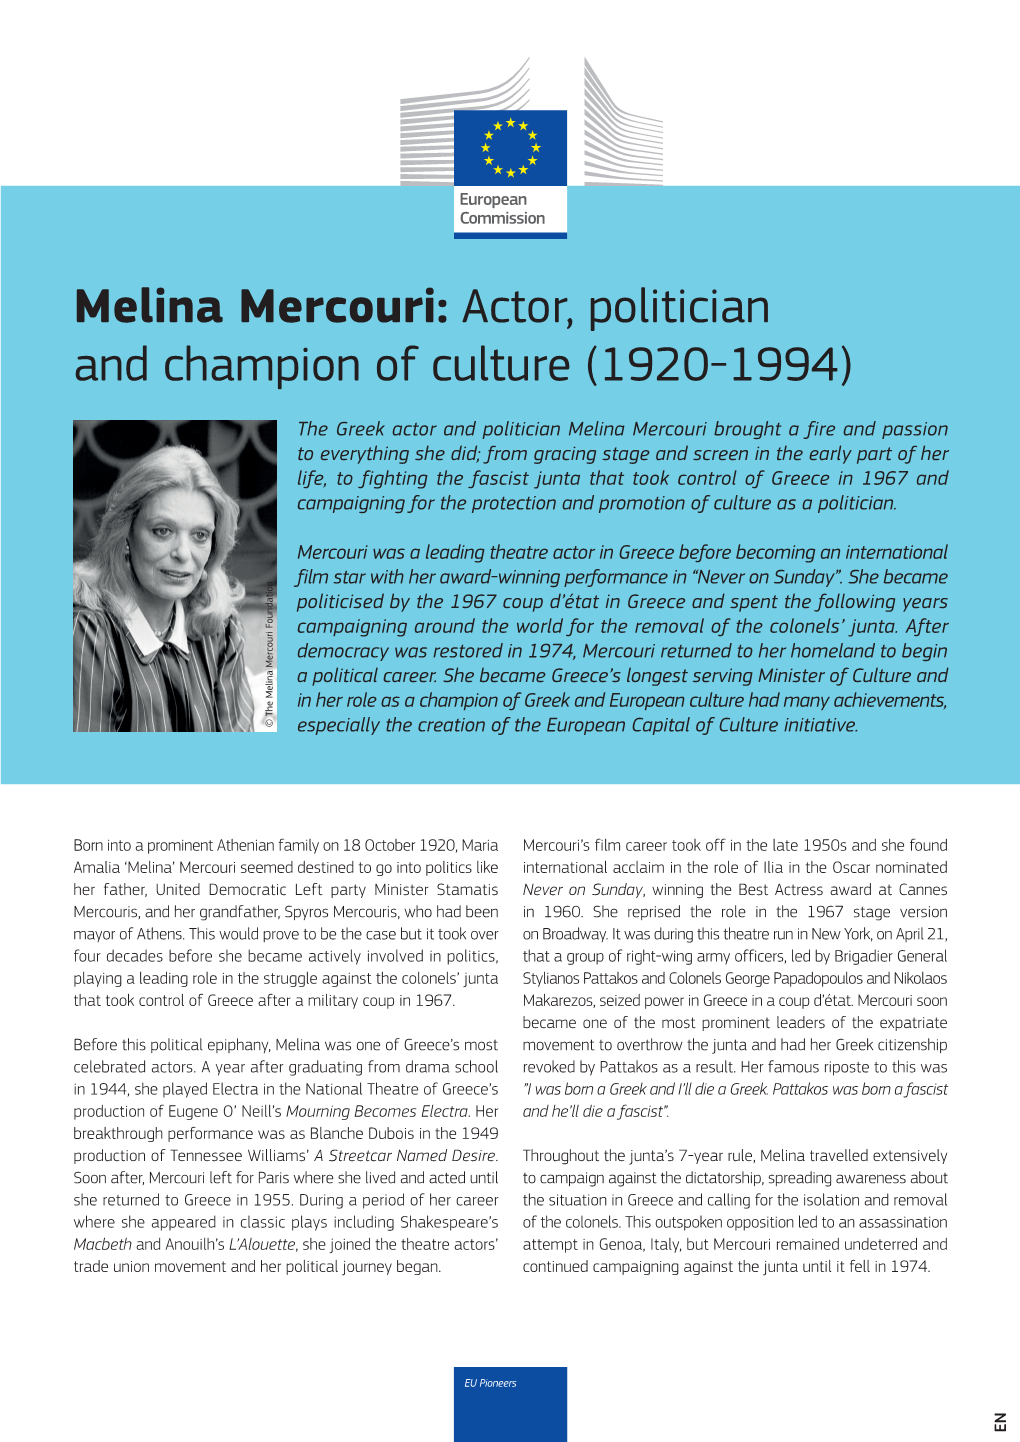 Melina Mercouri: Actor, Politician and Champion of Culture (1920-1994)